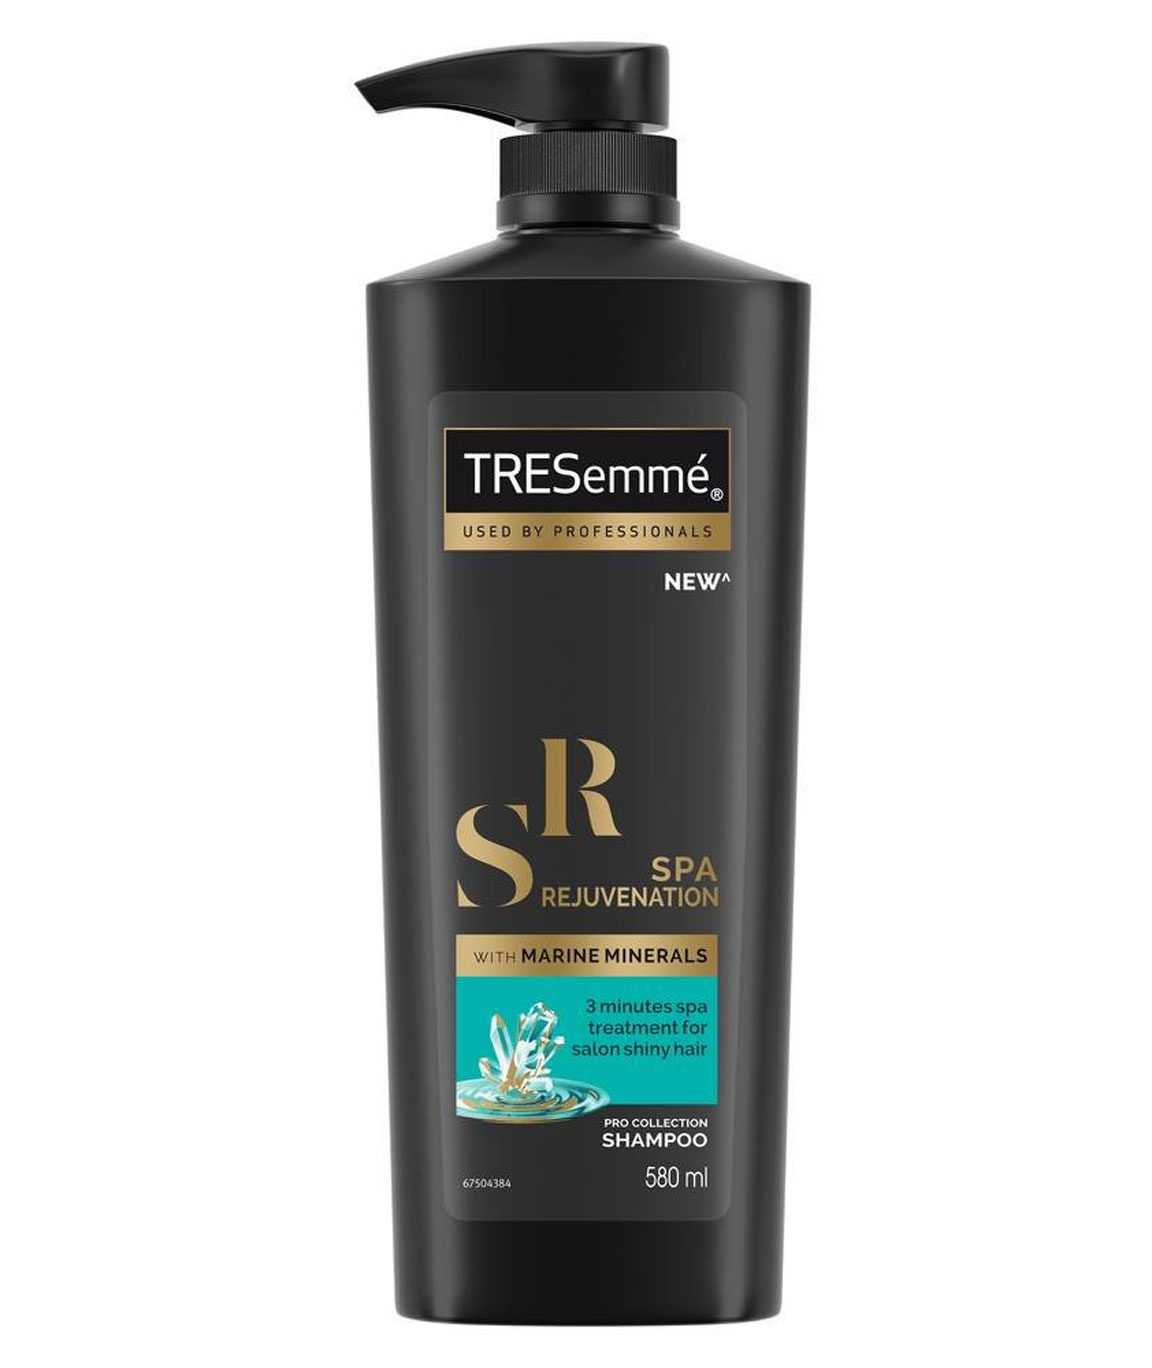 TRESemme Spa Rejuvenation Shampoo, 580ml